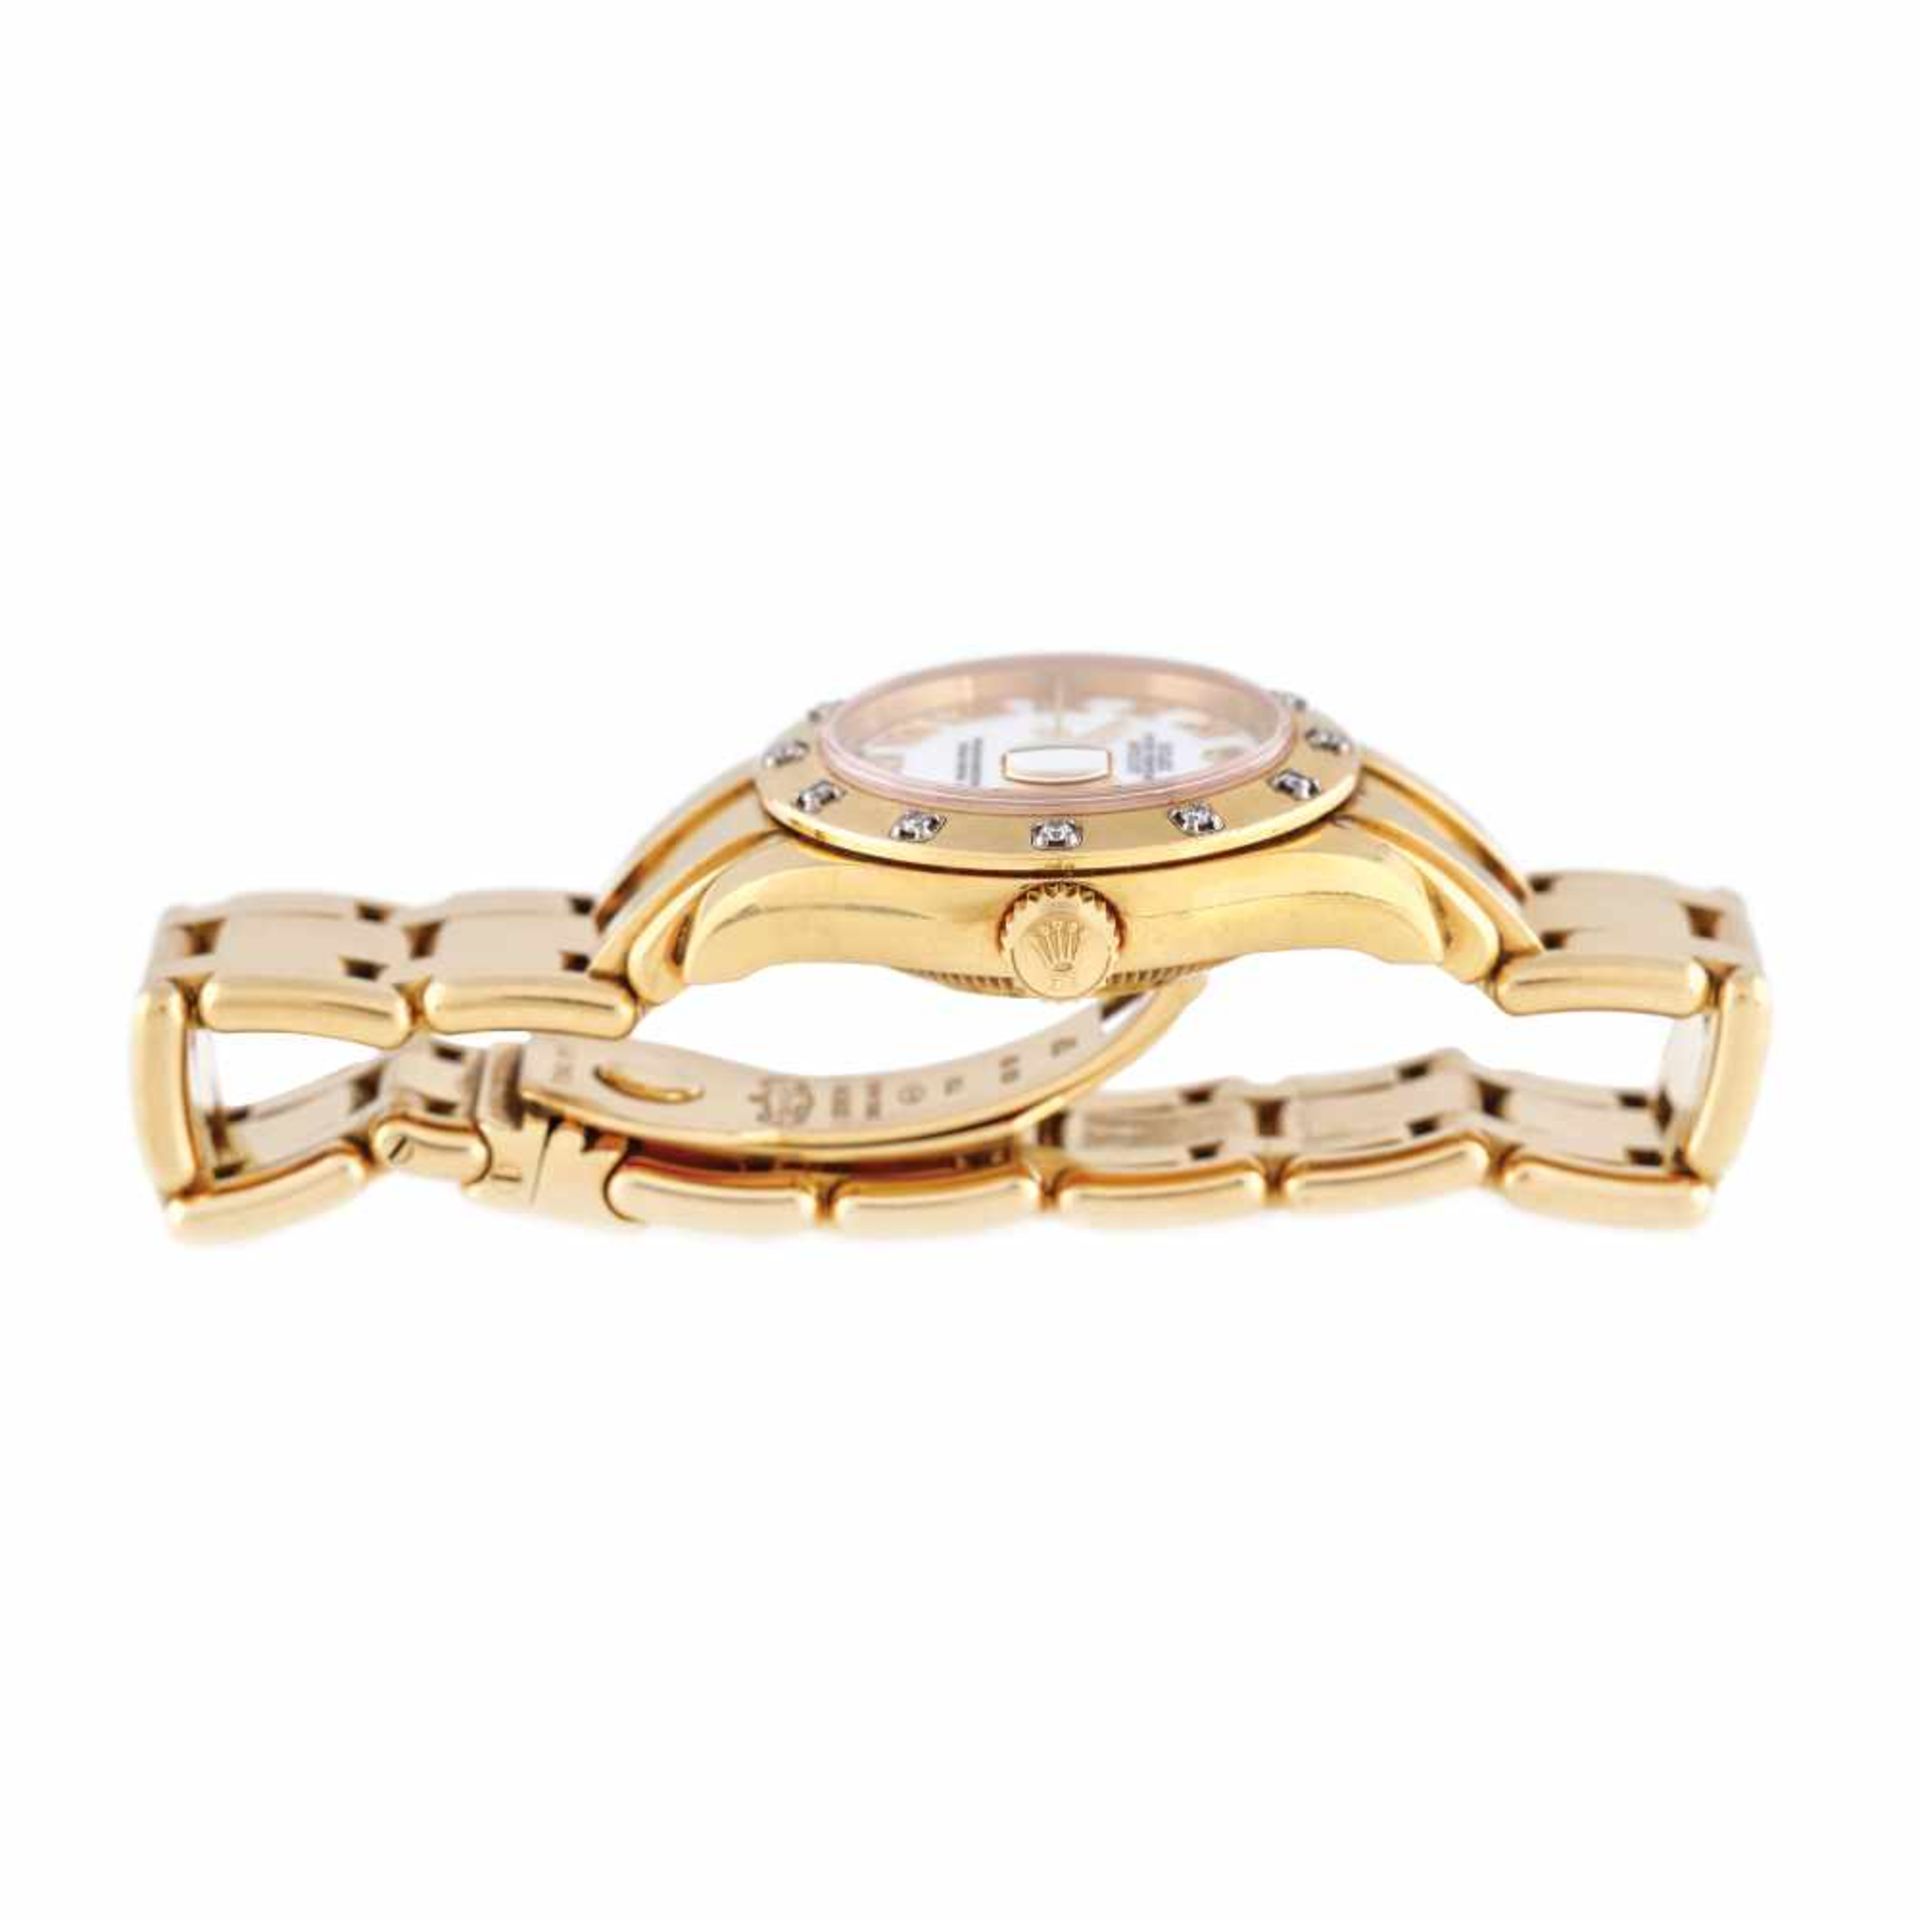 Rolex Datejust bracelet watch, gold, women, decorated with diamonds, provenance documents and origin - Bild 3 aus 5